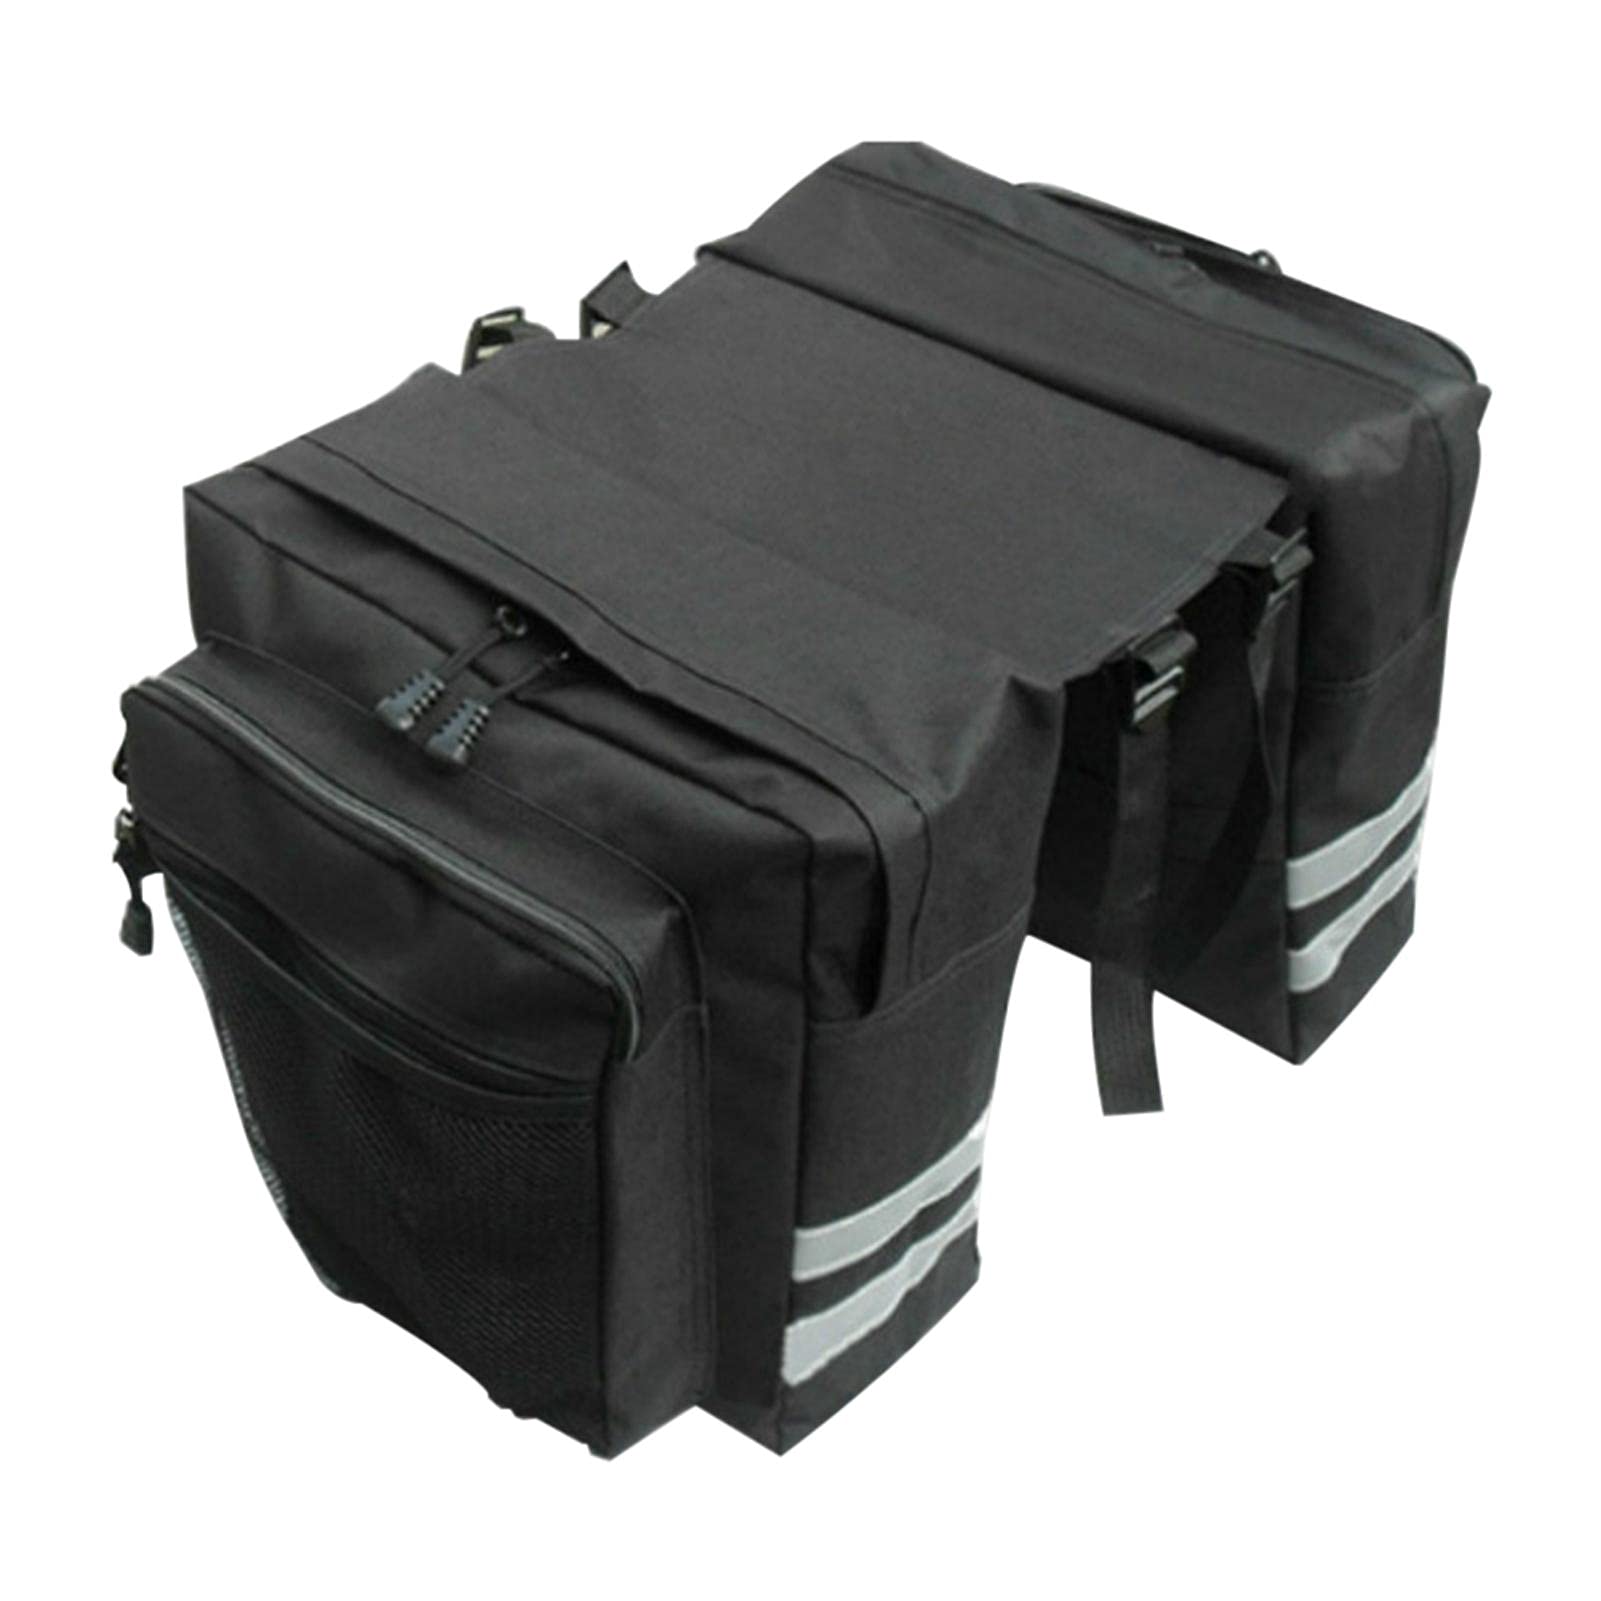 Anwangda Fahrradgepäckträgertasche, wasserdicht, verschleißfest, Fahrradgepäckträger, doppelseitige Gepäckträgertasche, Gepäckträgertasche (schwarz) von Anwangda